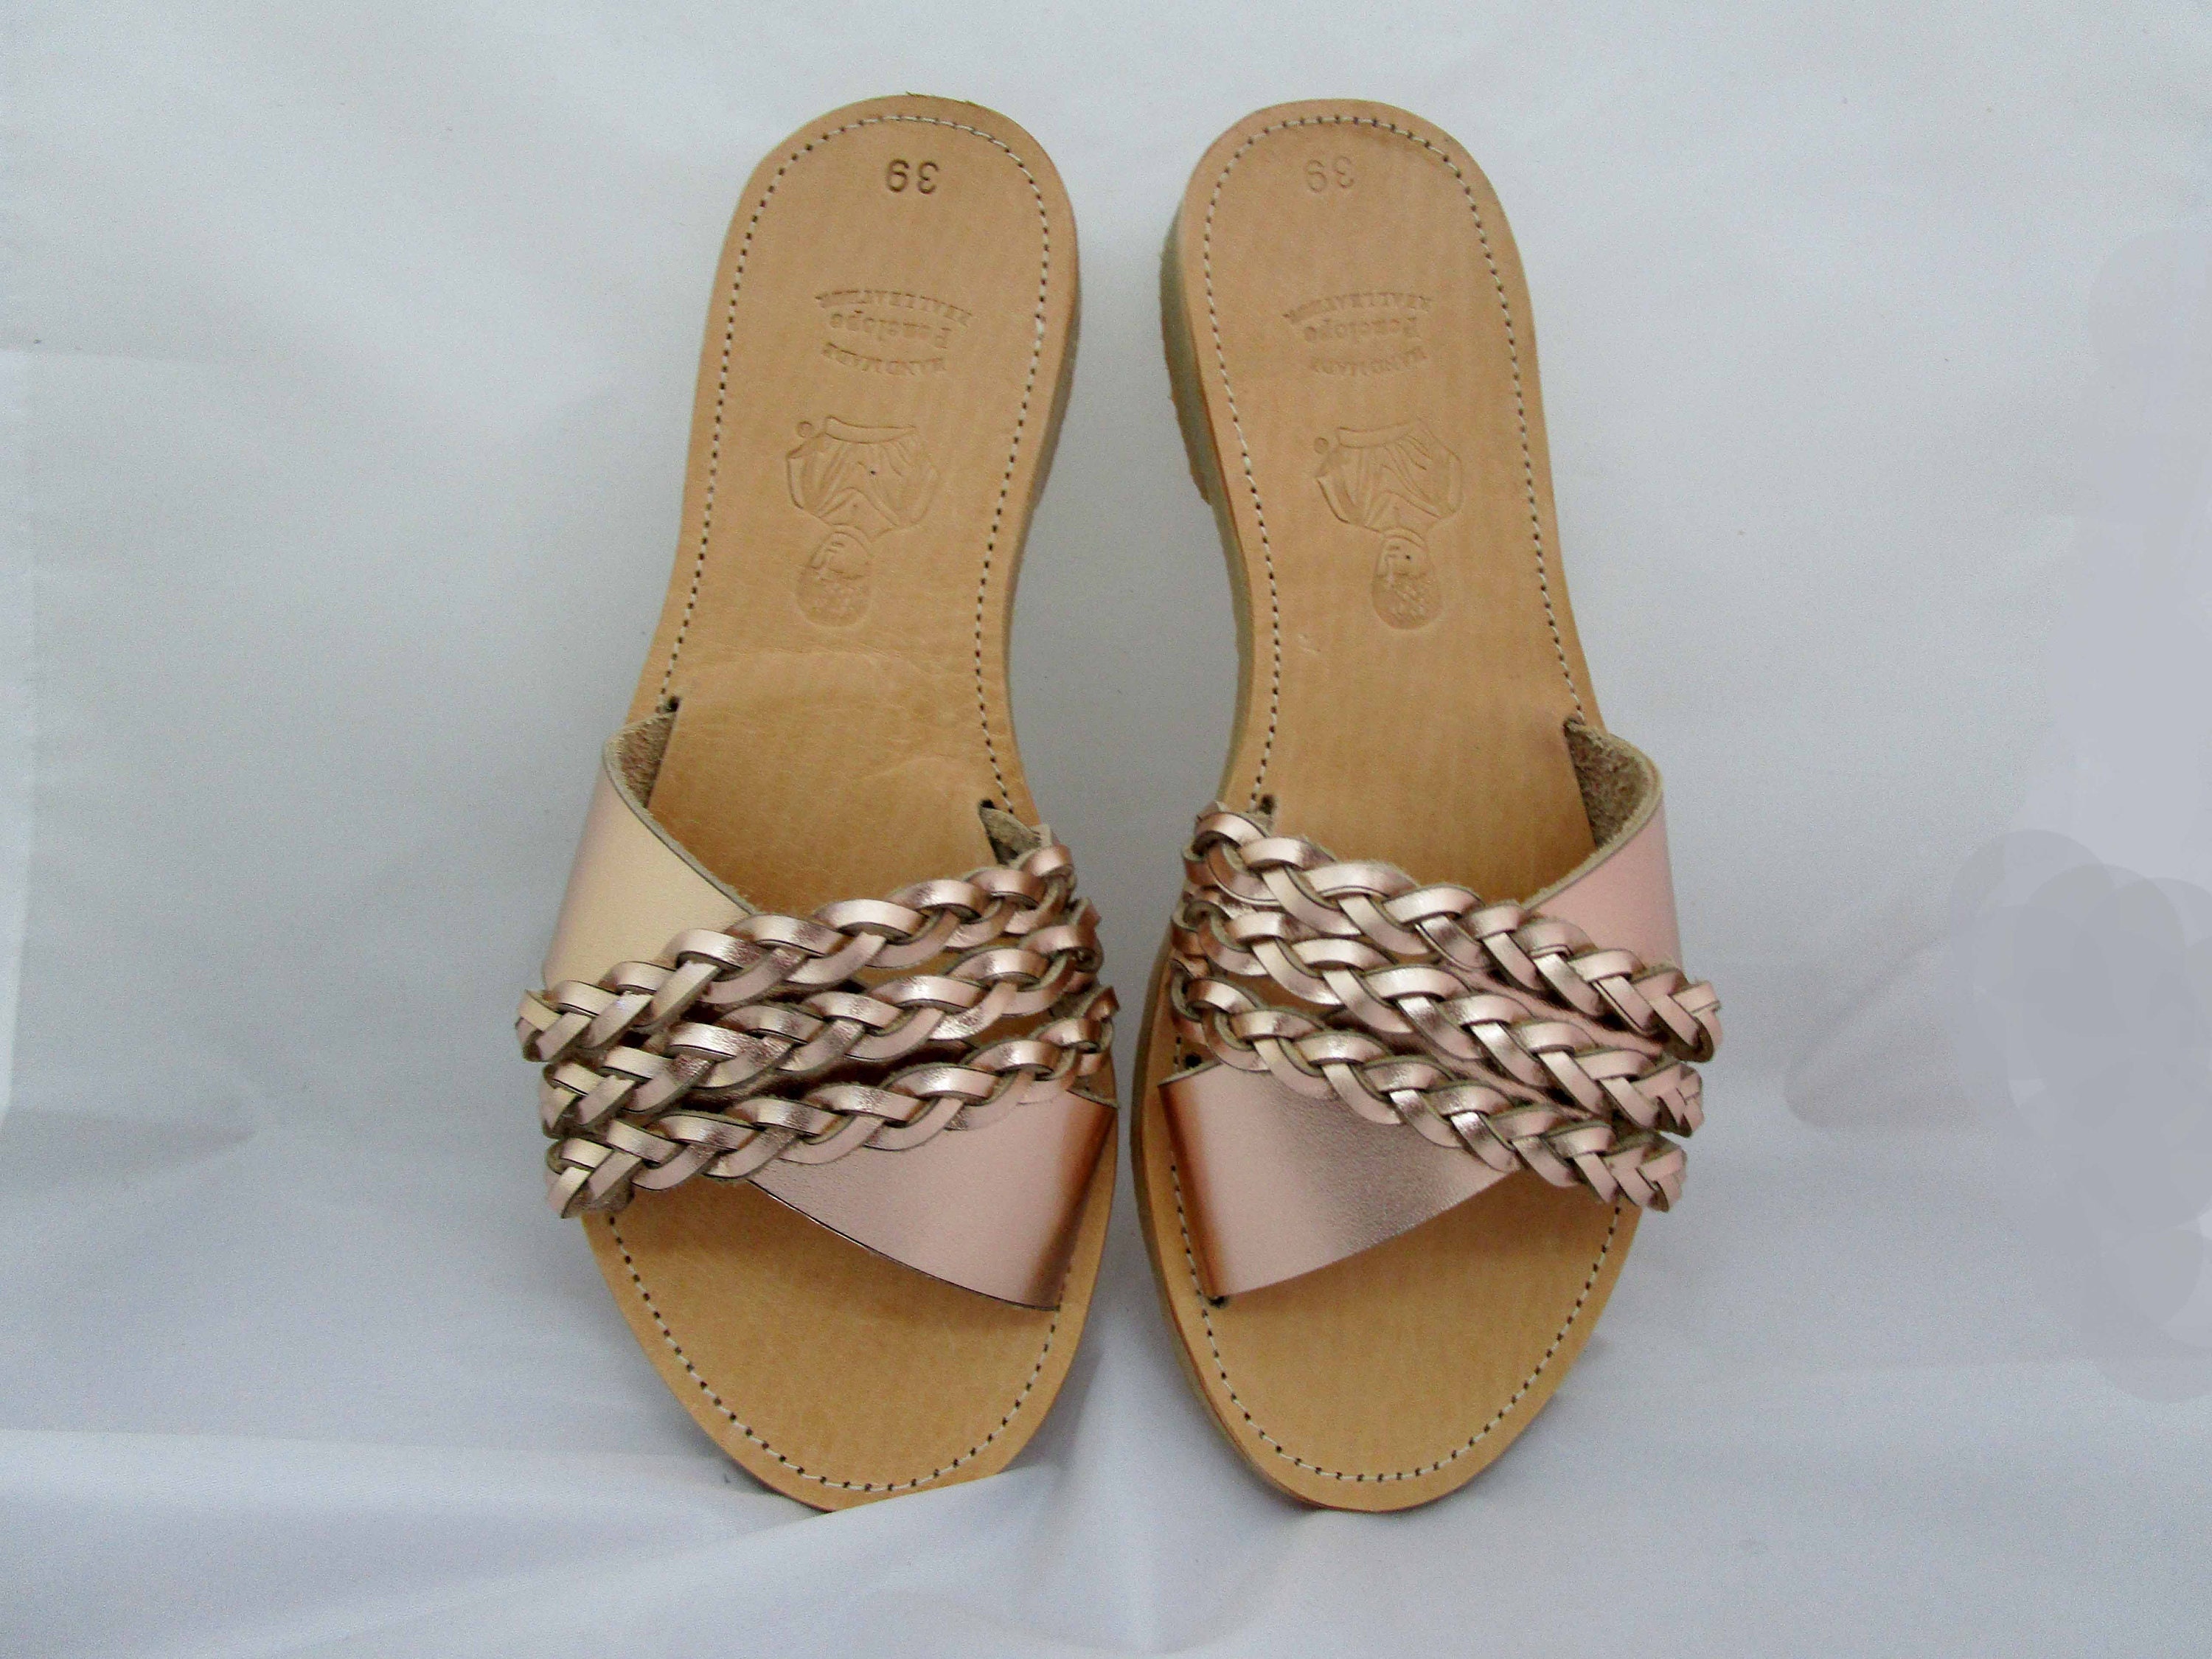 Greek sandals Sandals women Leather sandals Rose gold | Etsy